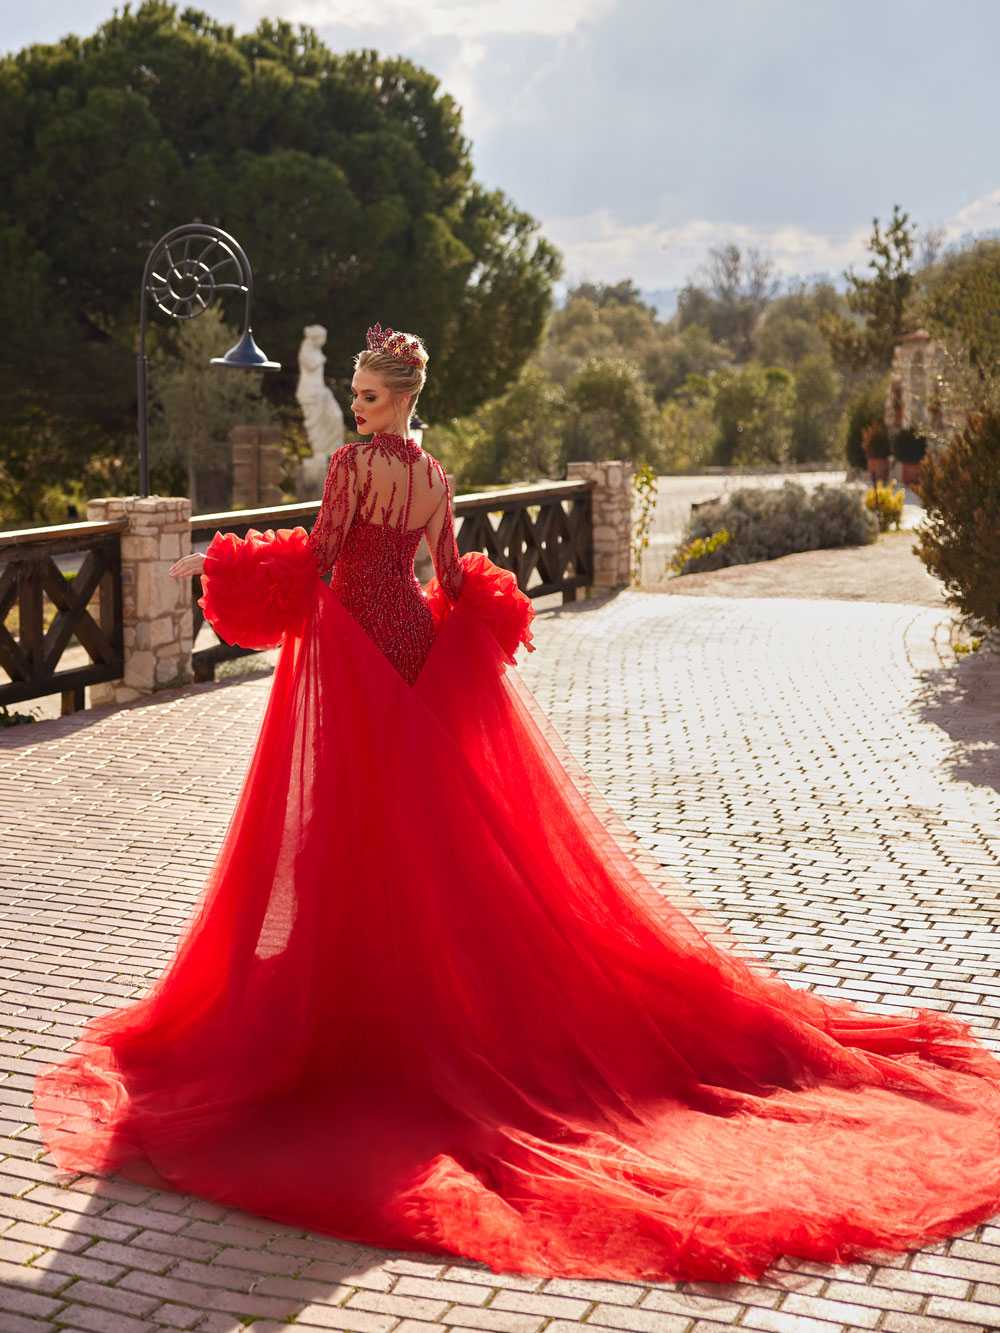 Powder Rose Embellished Gown - Jasmine Bains